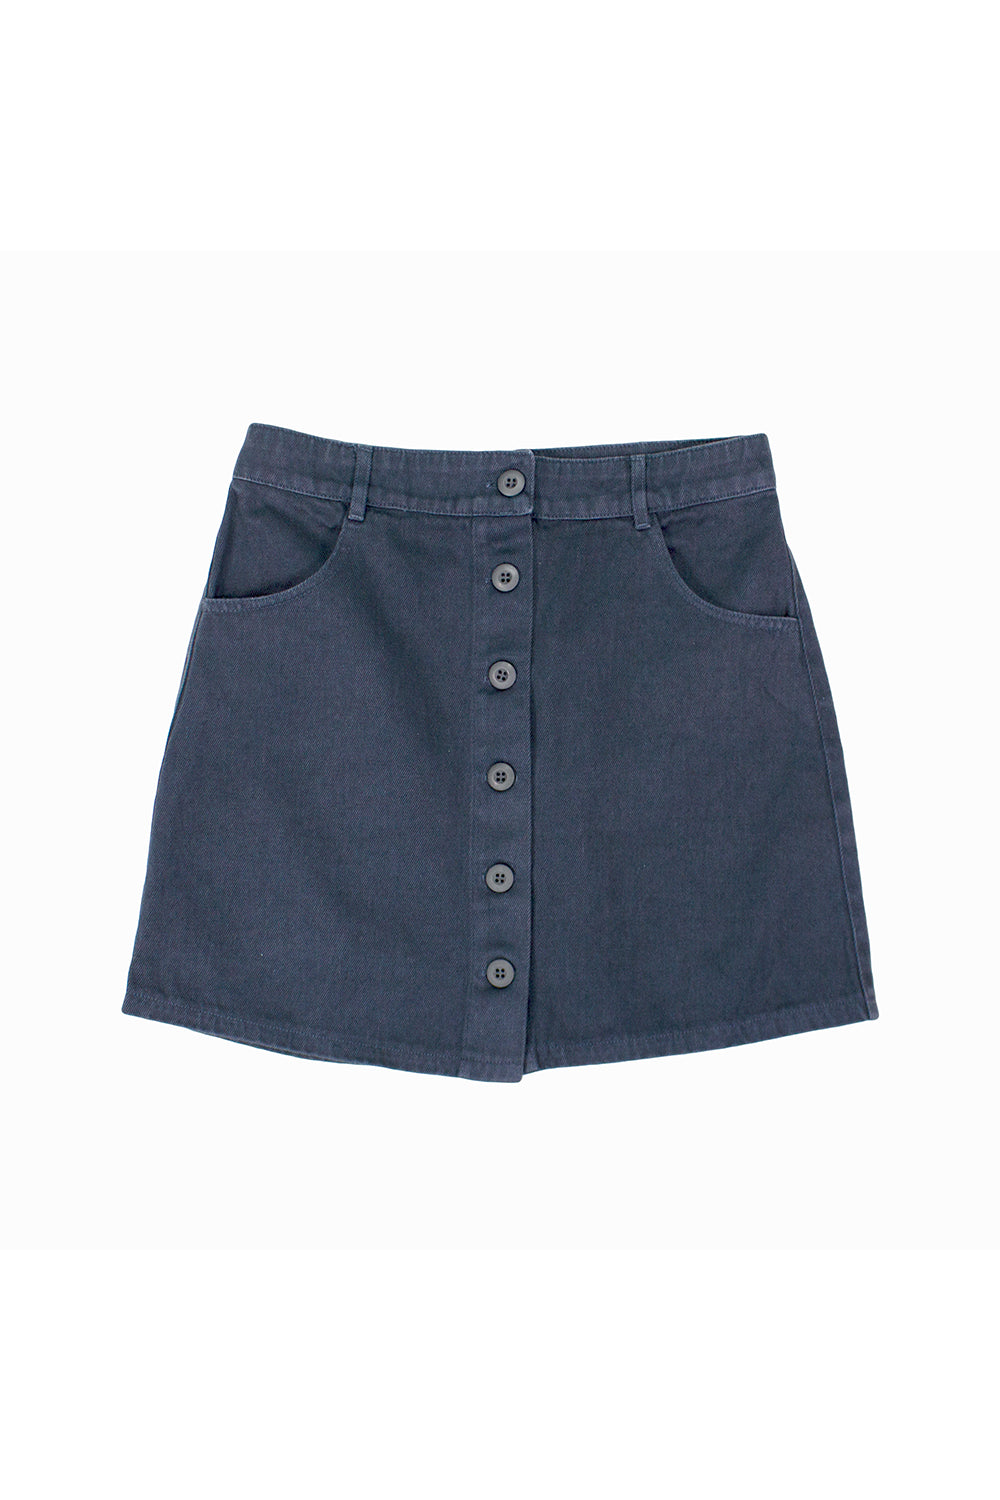 Vassar Skirt | Jungmaven Hemp Clothing & Accessories / Color: Diesel Gray